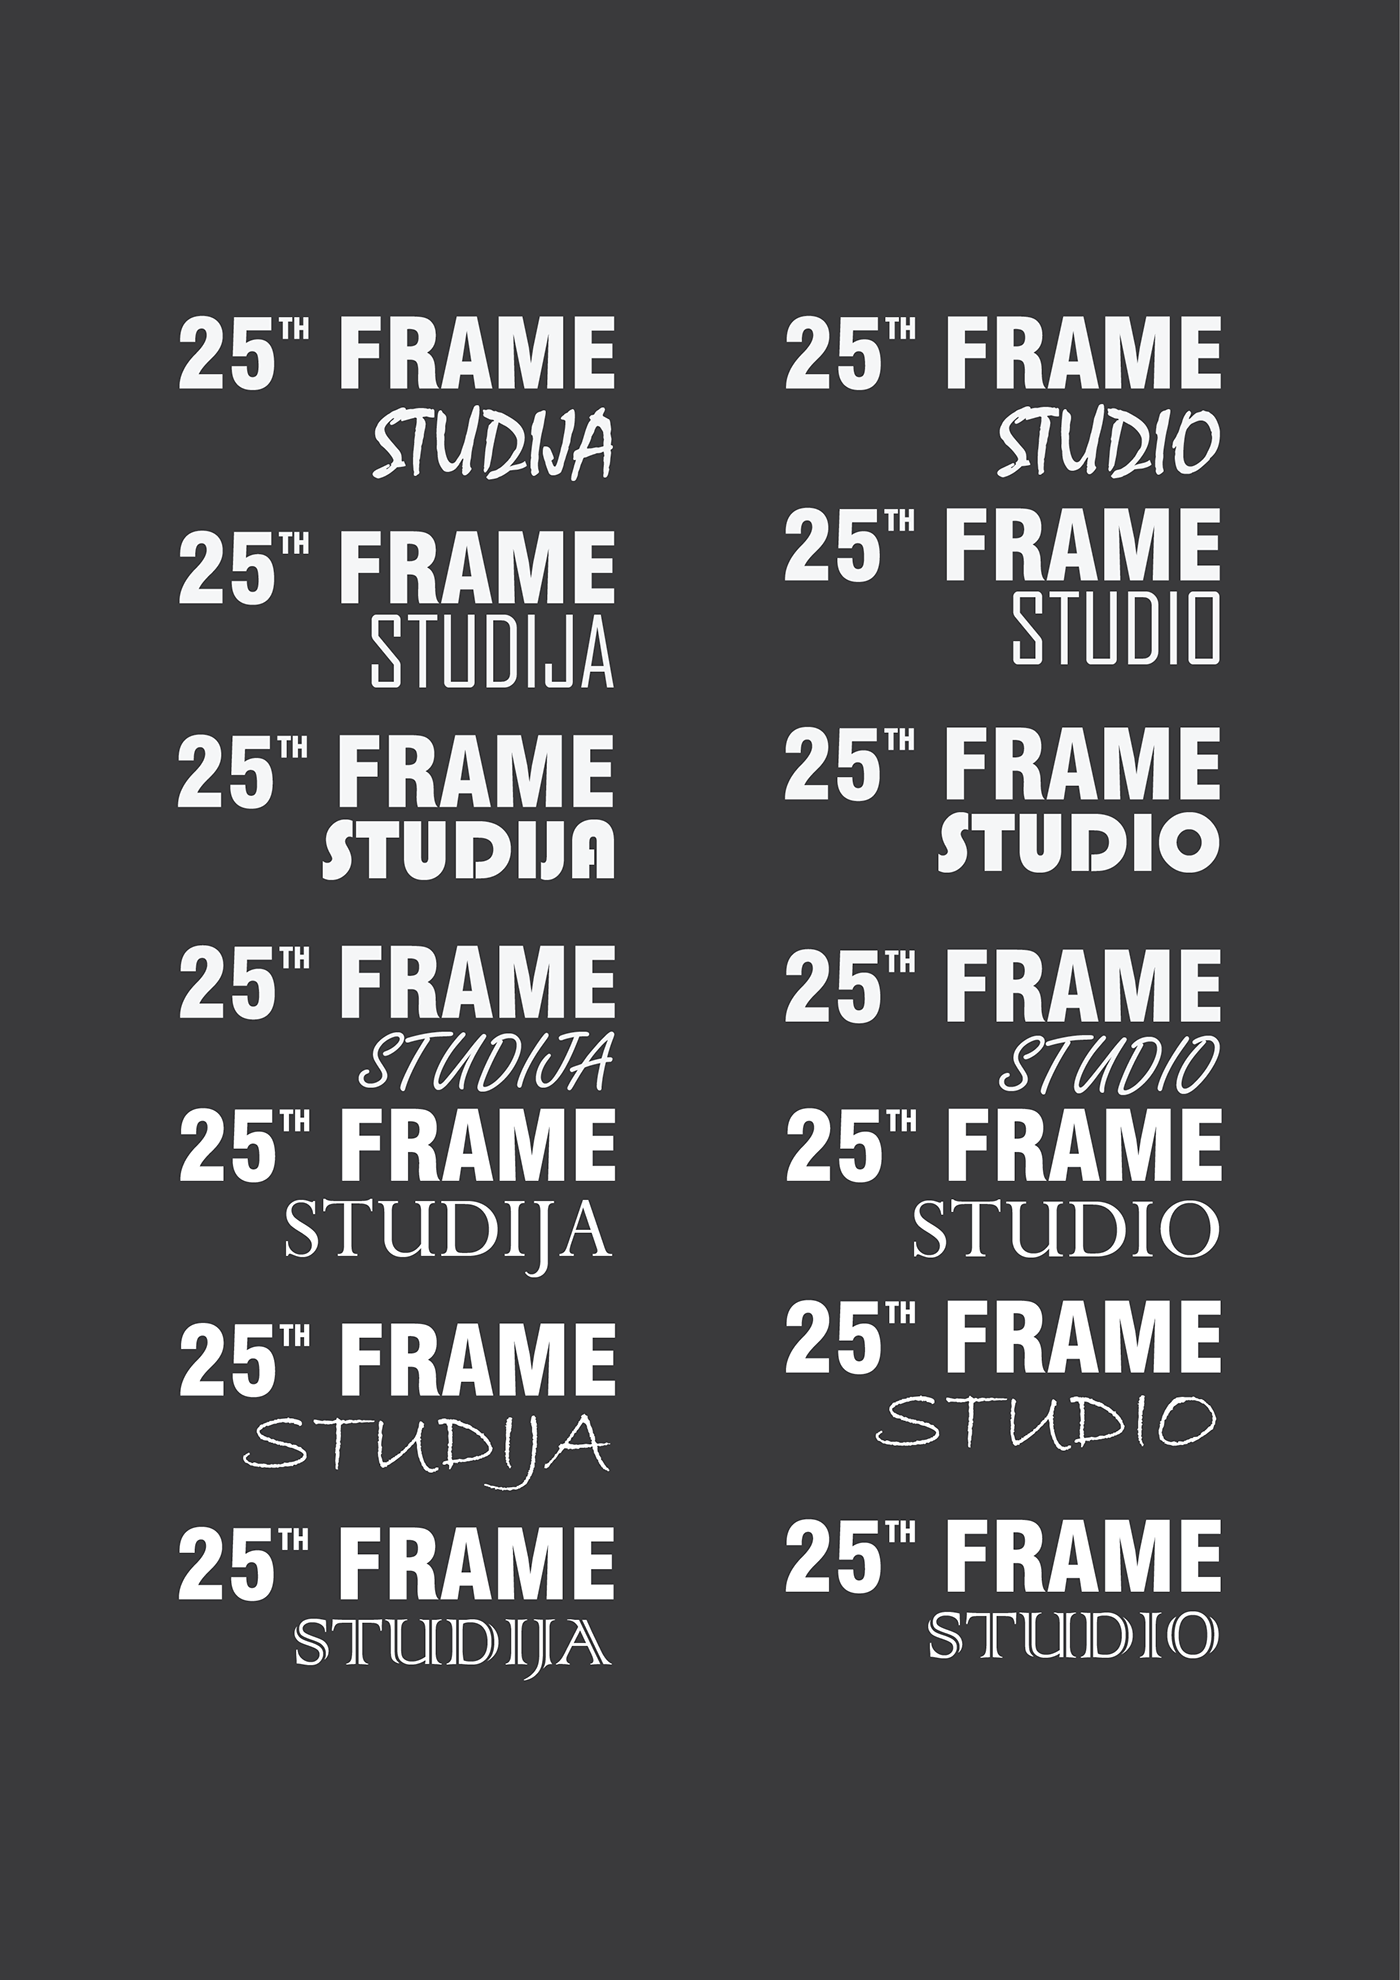 25TH FRAME STUDIO frame studio logo 25th concept